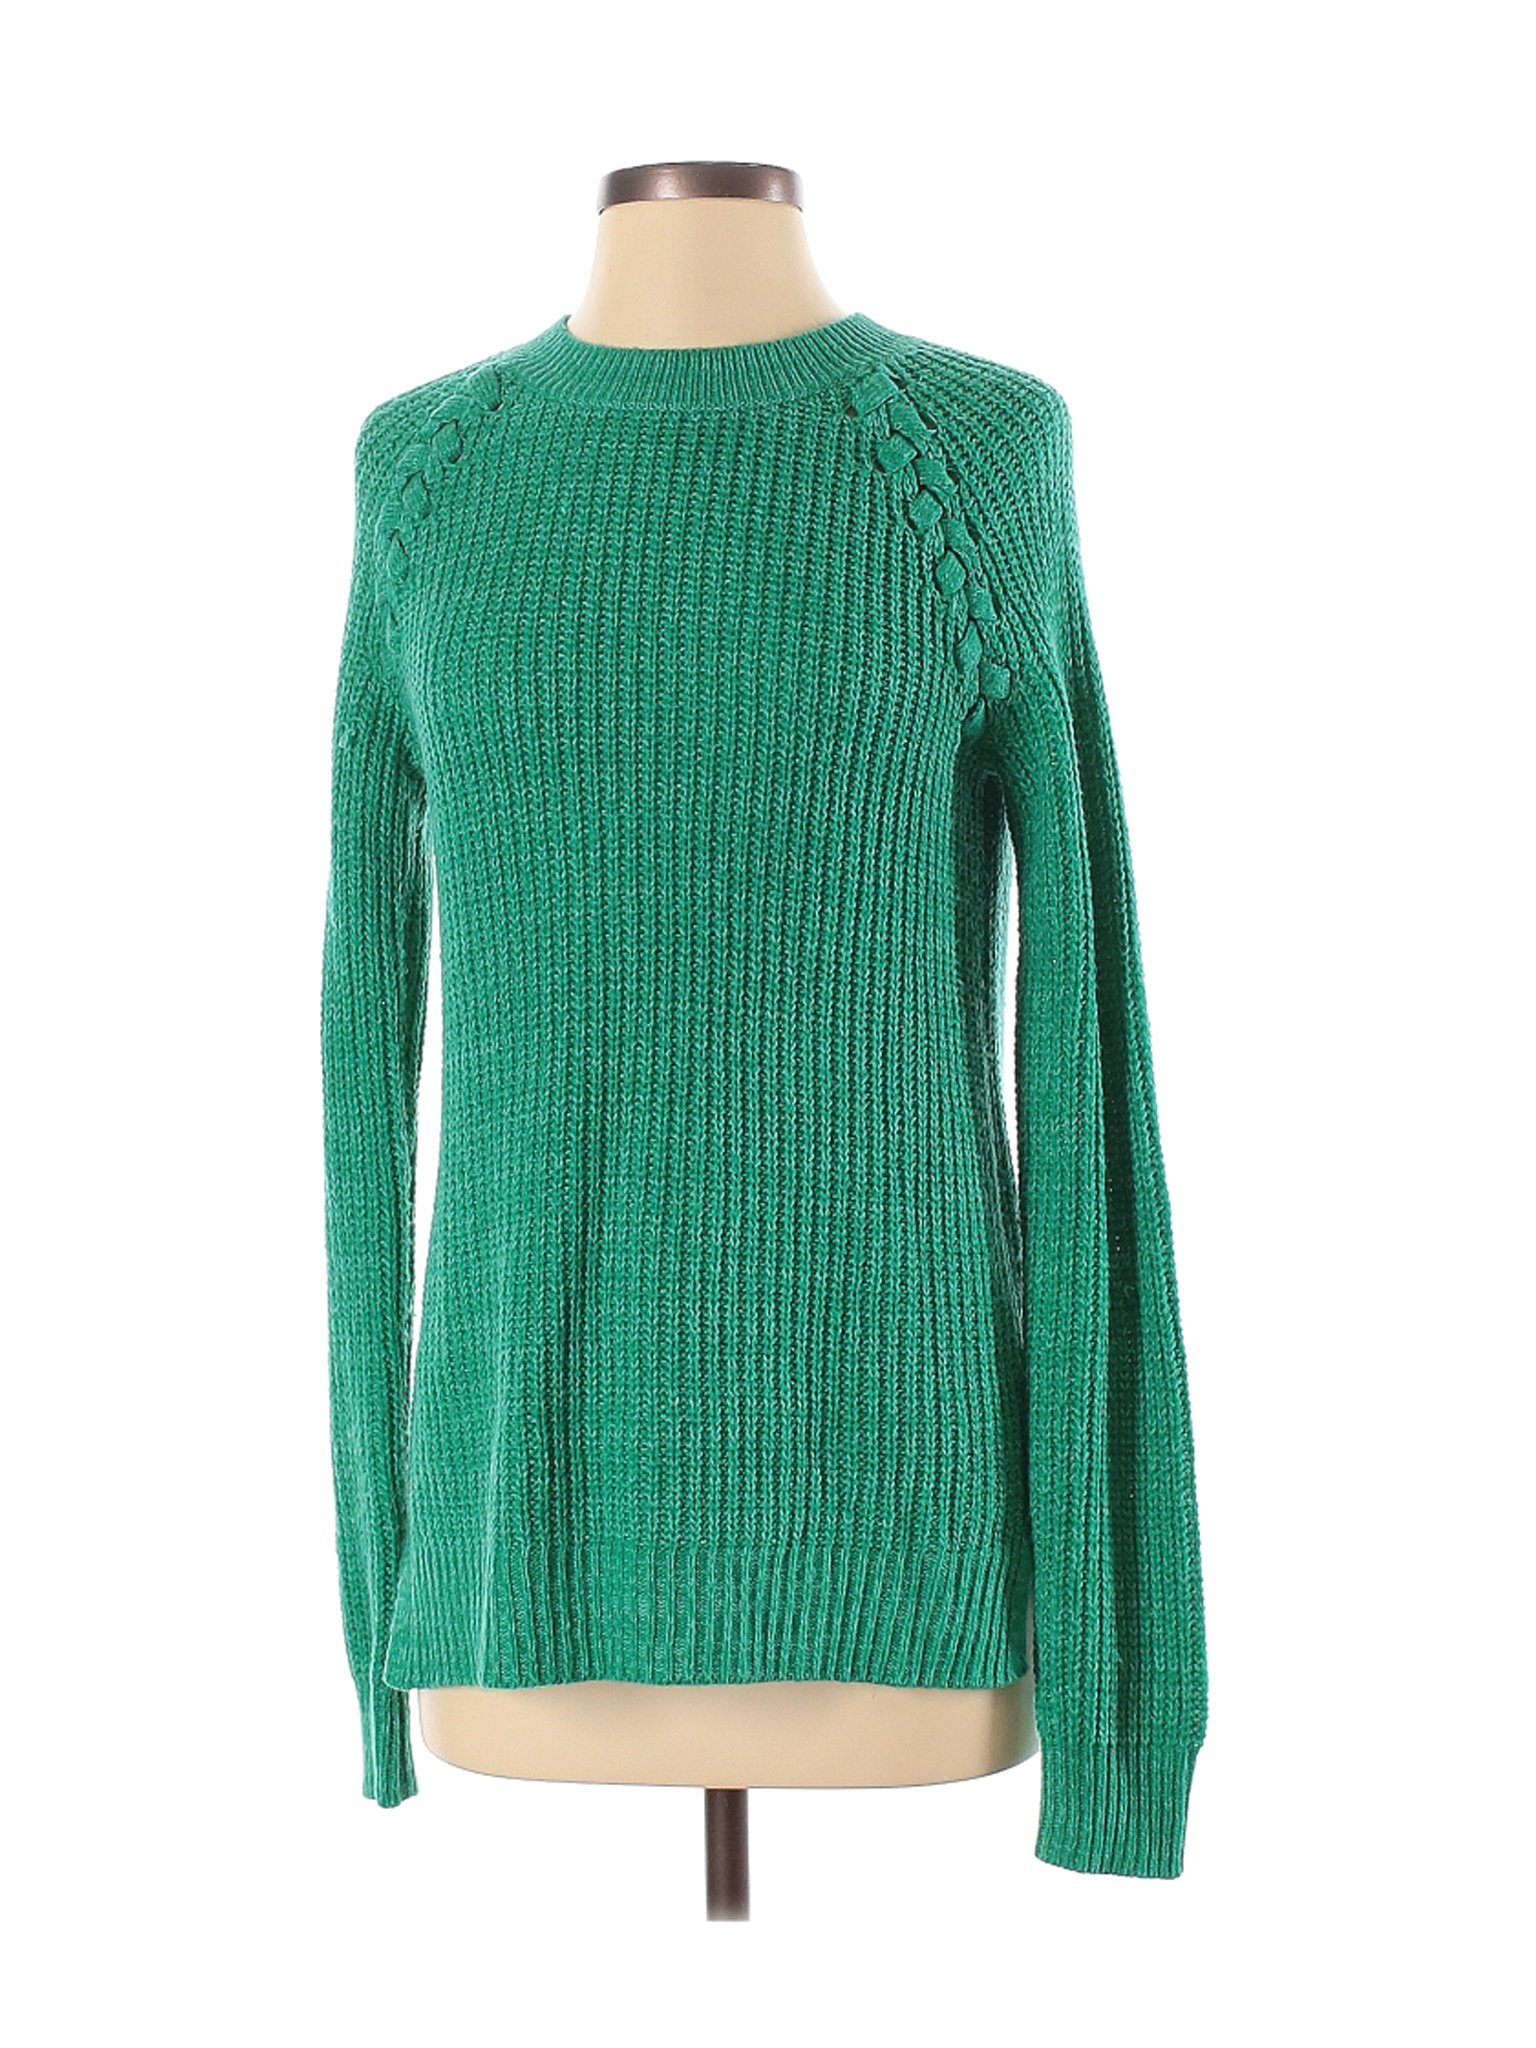 SO Women Green Pullover Sweater M | eBay